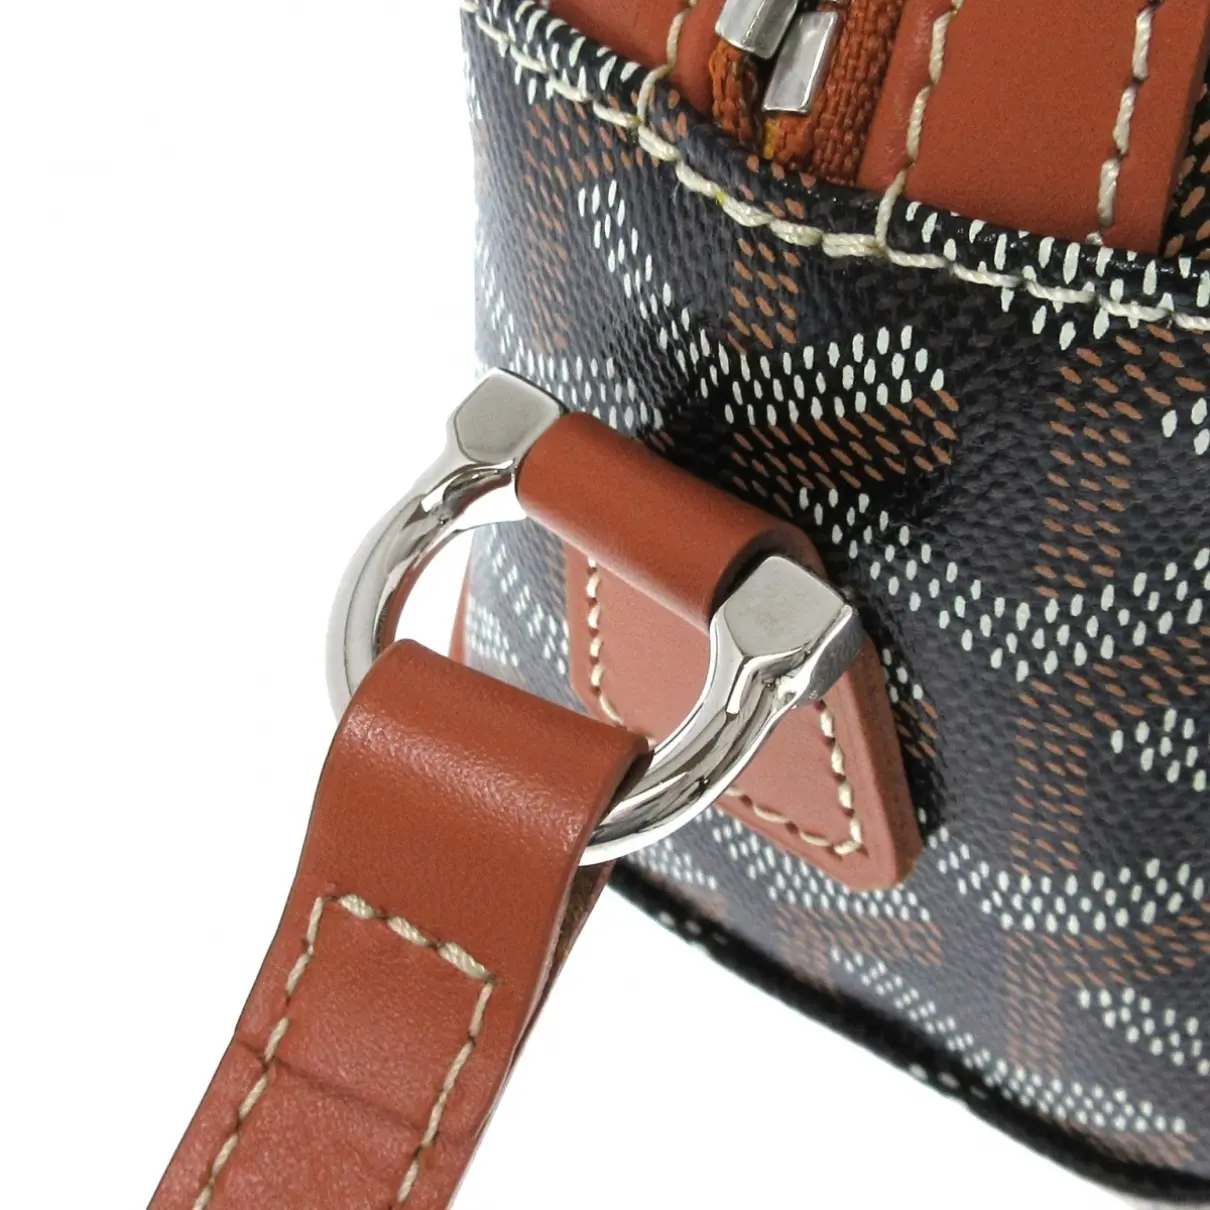 Leather handbag Goyard